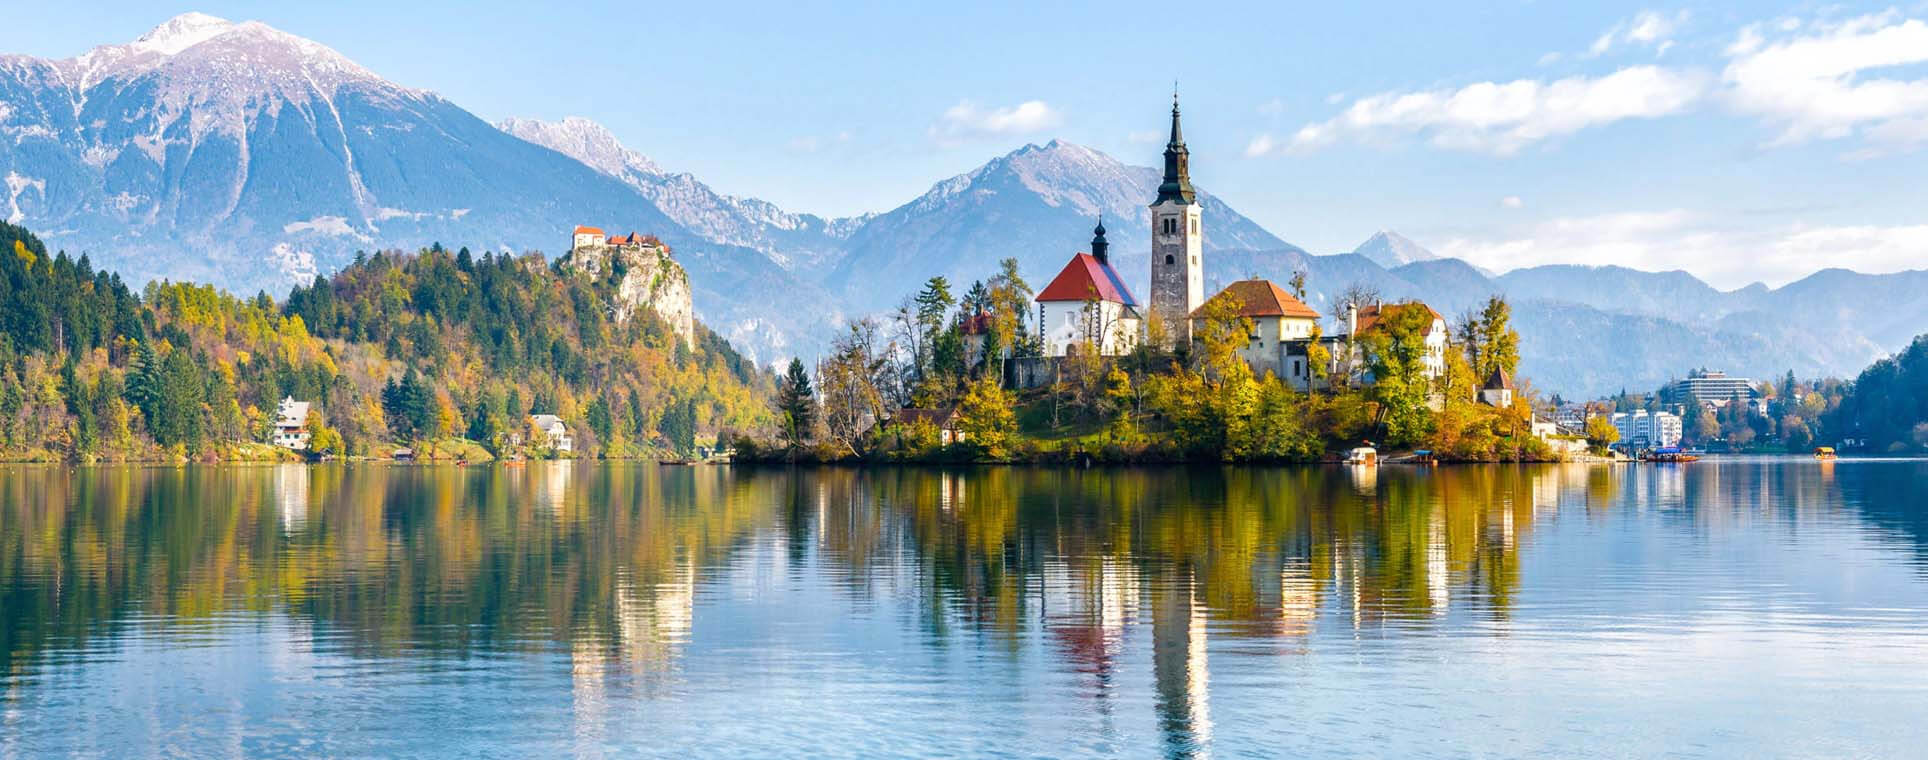 Slovenia Tourist Attractions